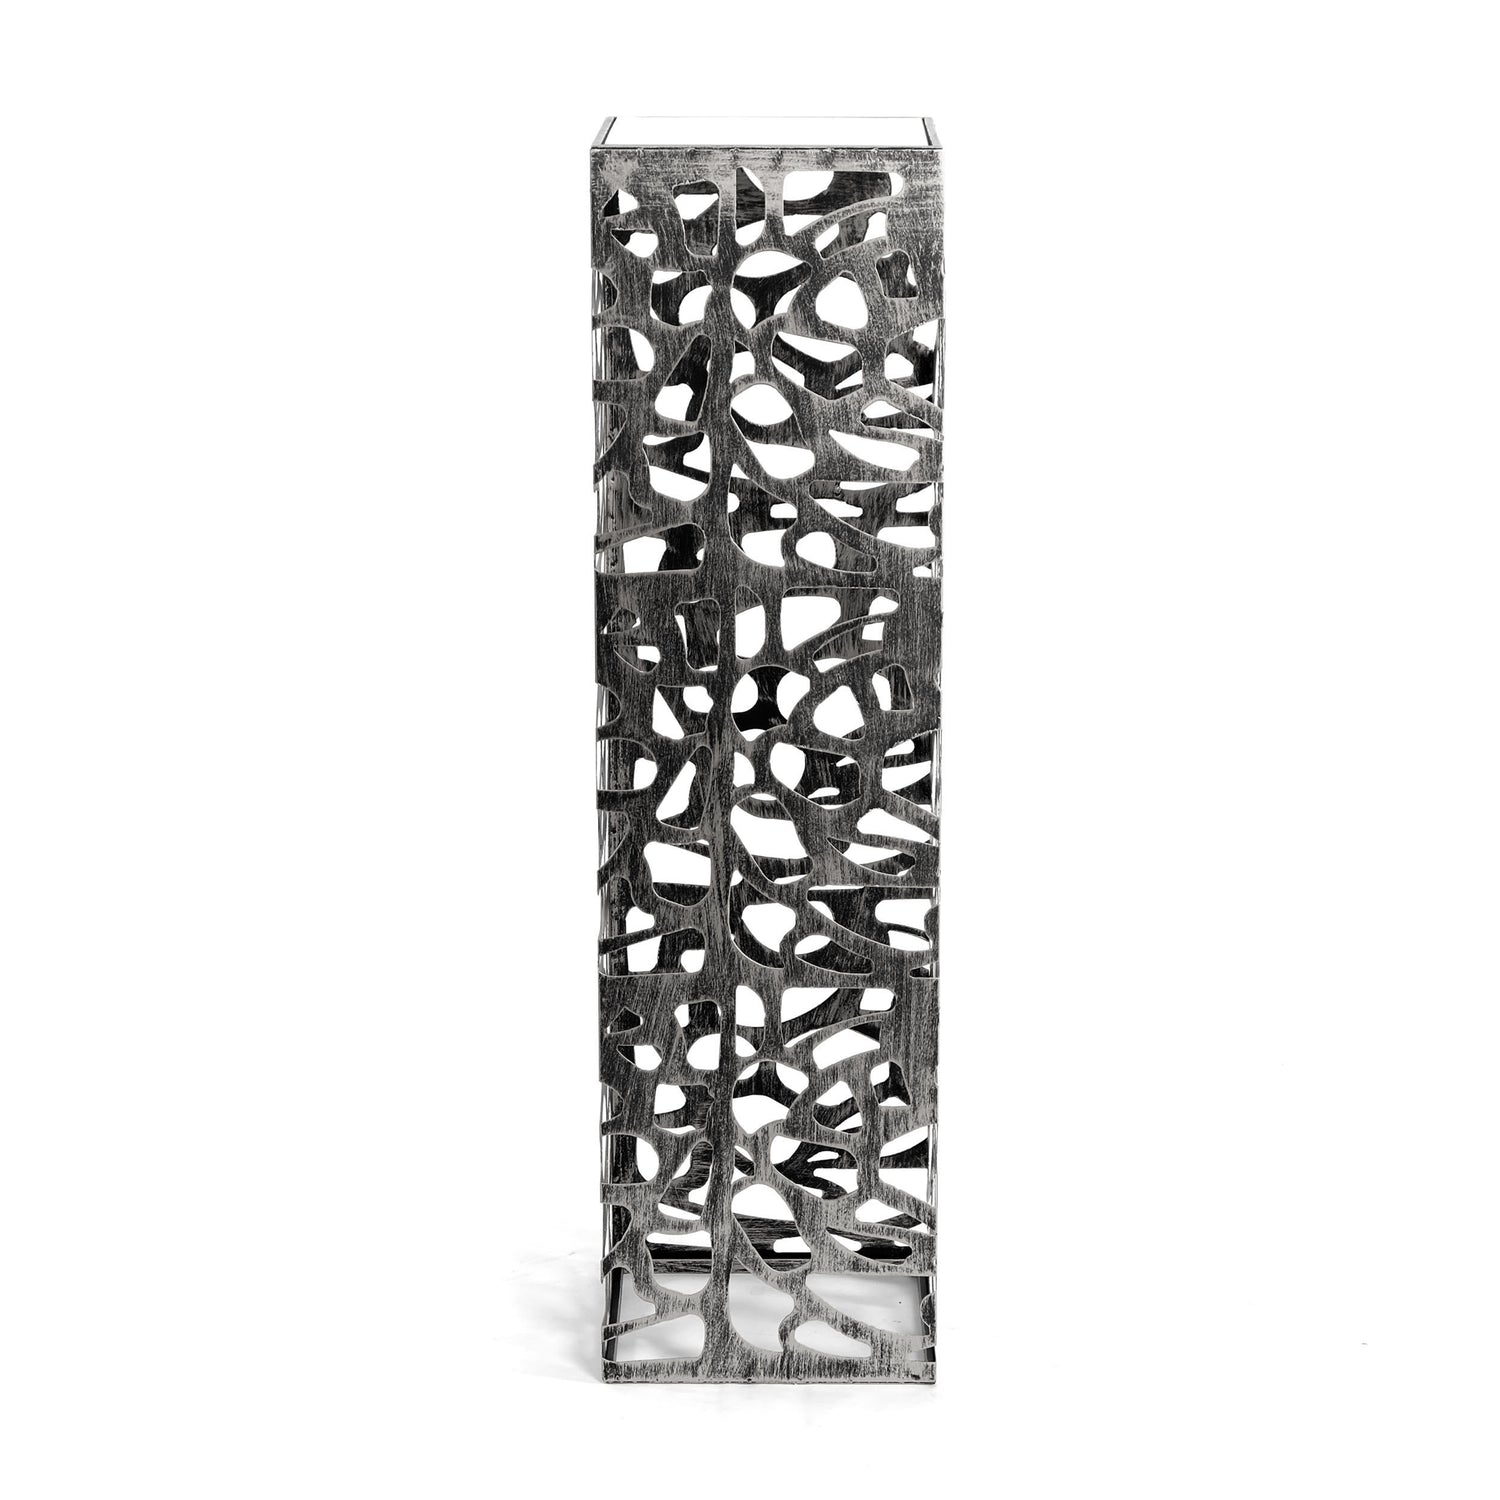 DEKO SÄULE "ENZA GRANDE" | 100 cm, antik-silber | Dekofigur aus Metall